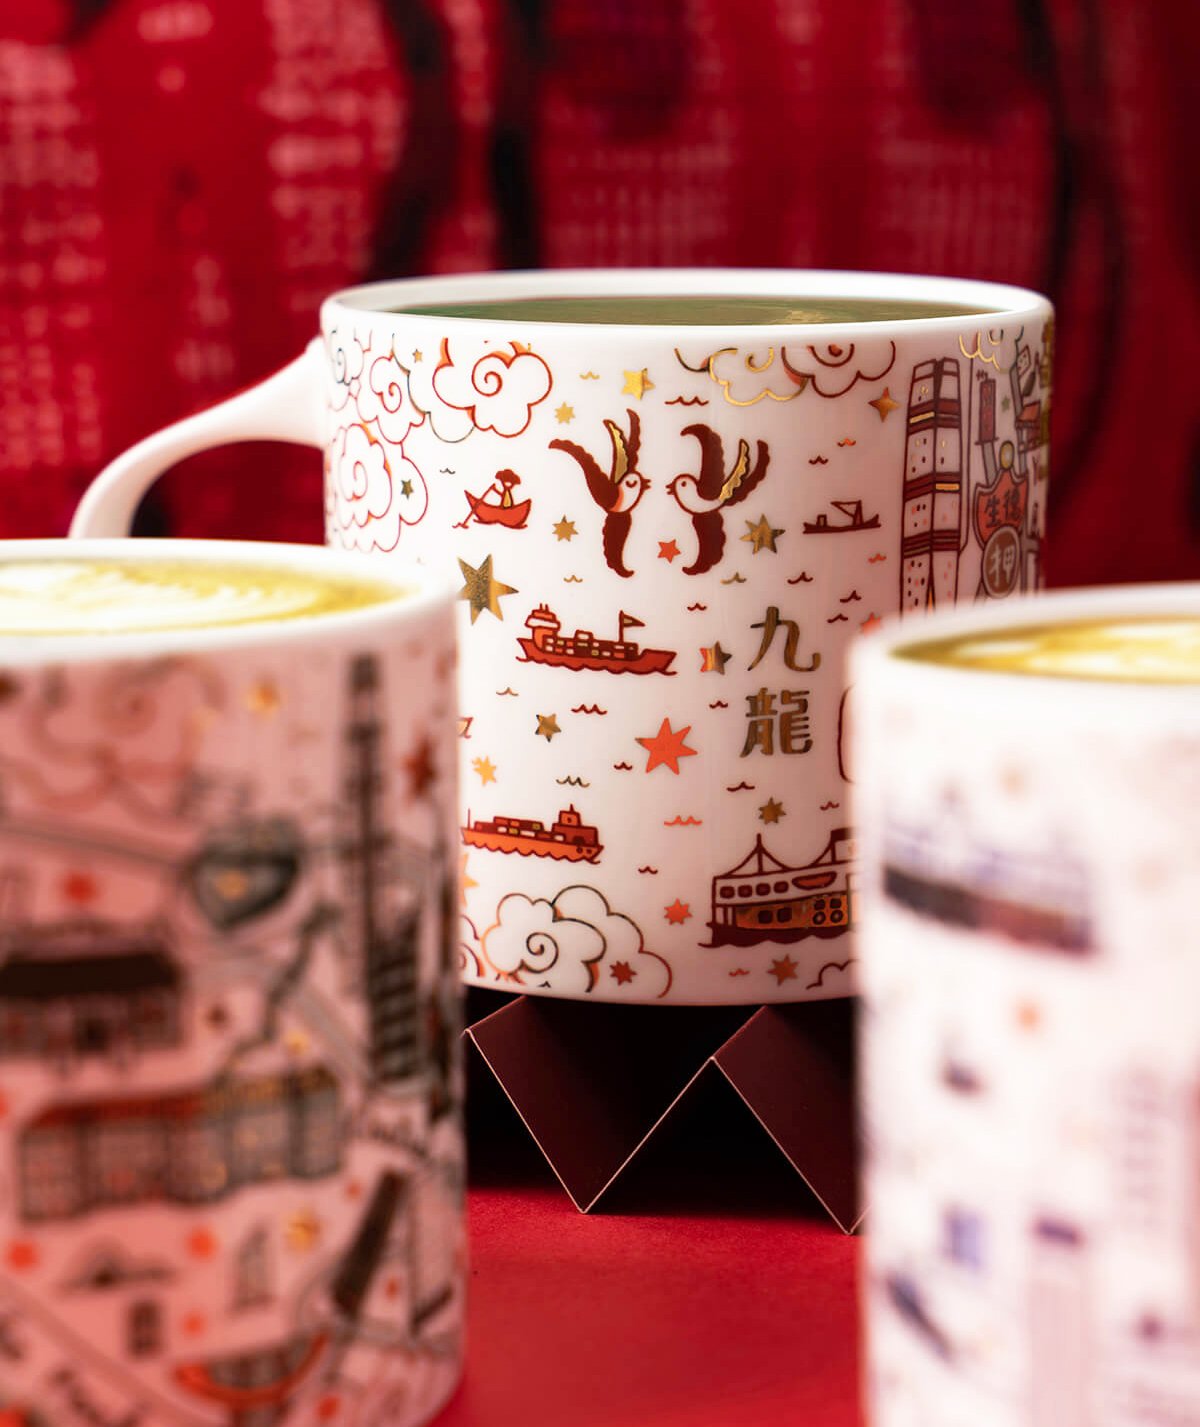 HK willow festive mugs